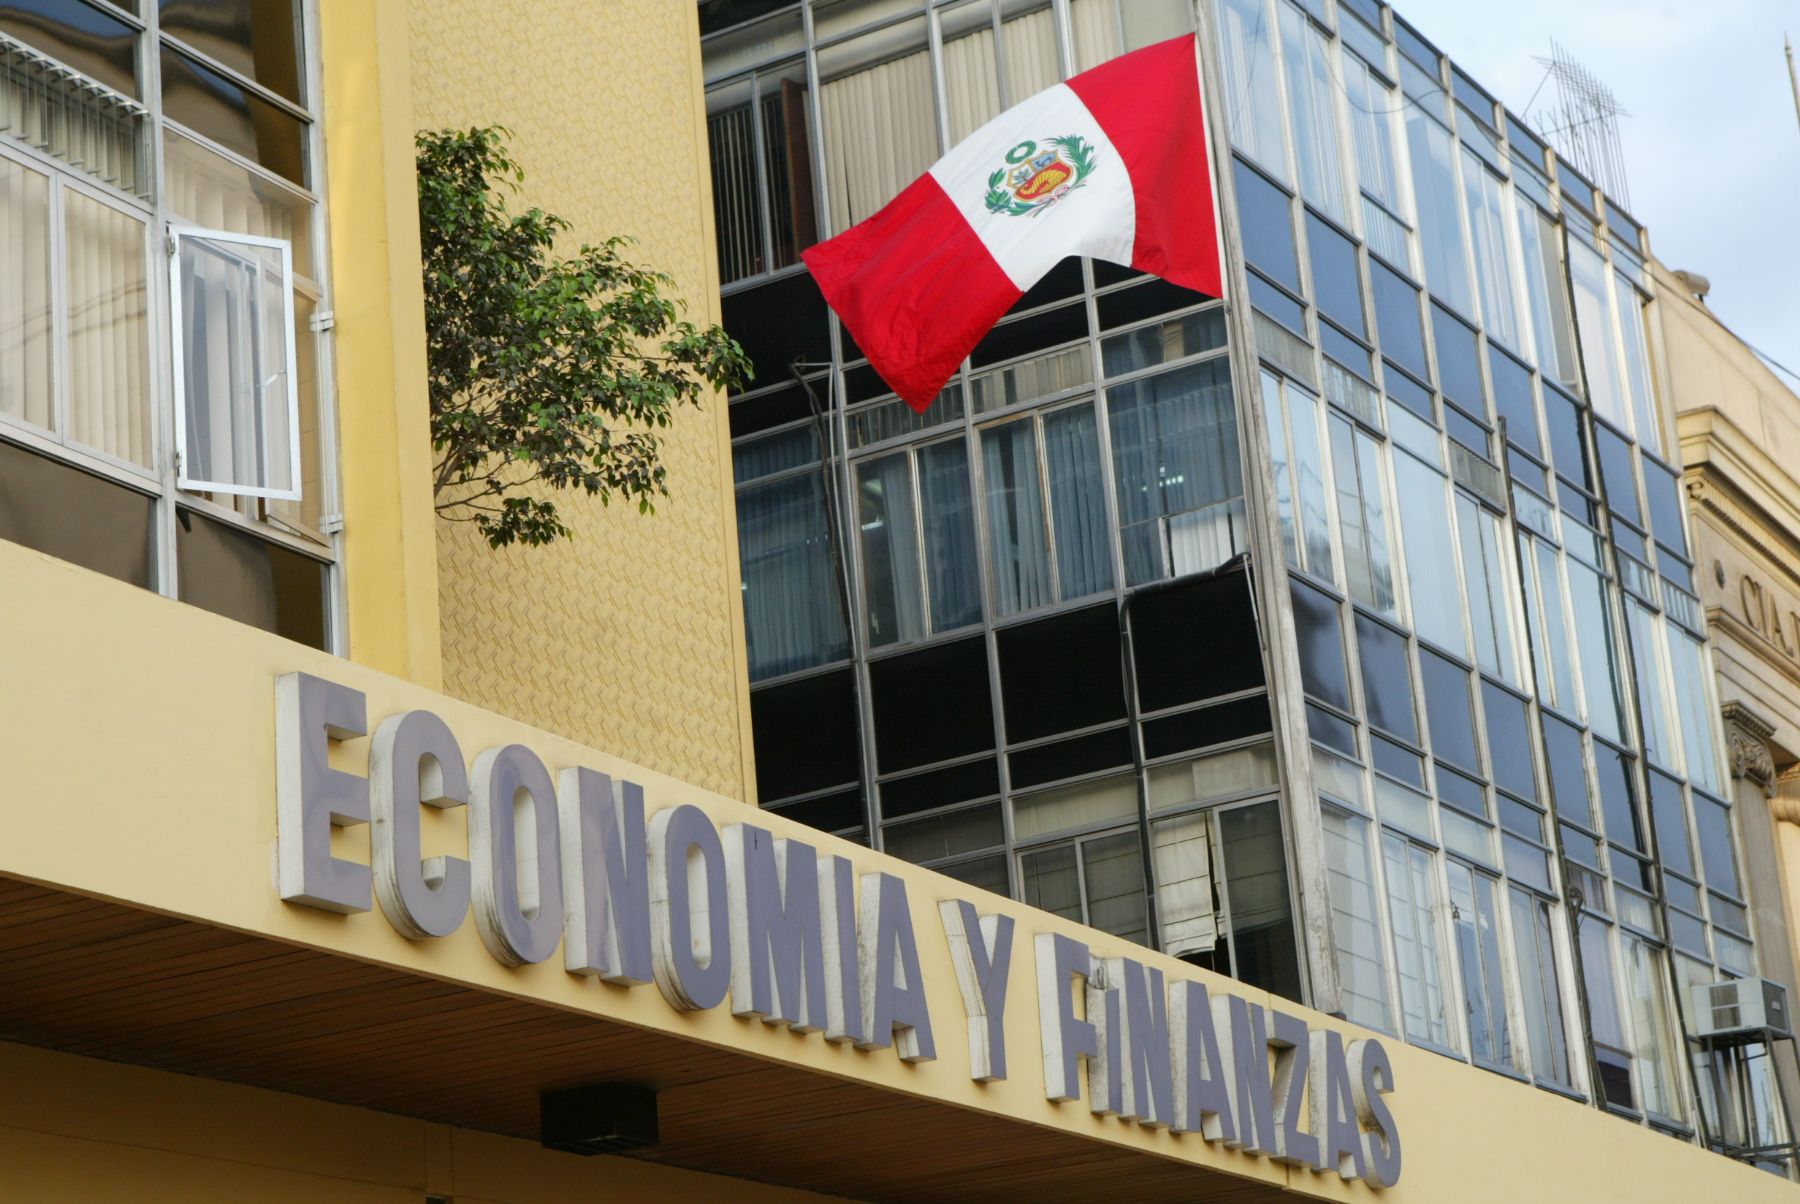 Image result for gasto corriente peruano